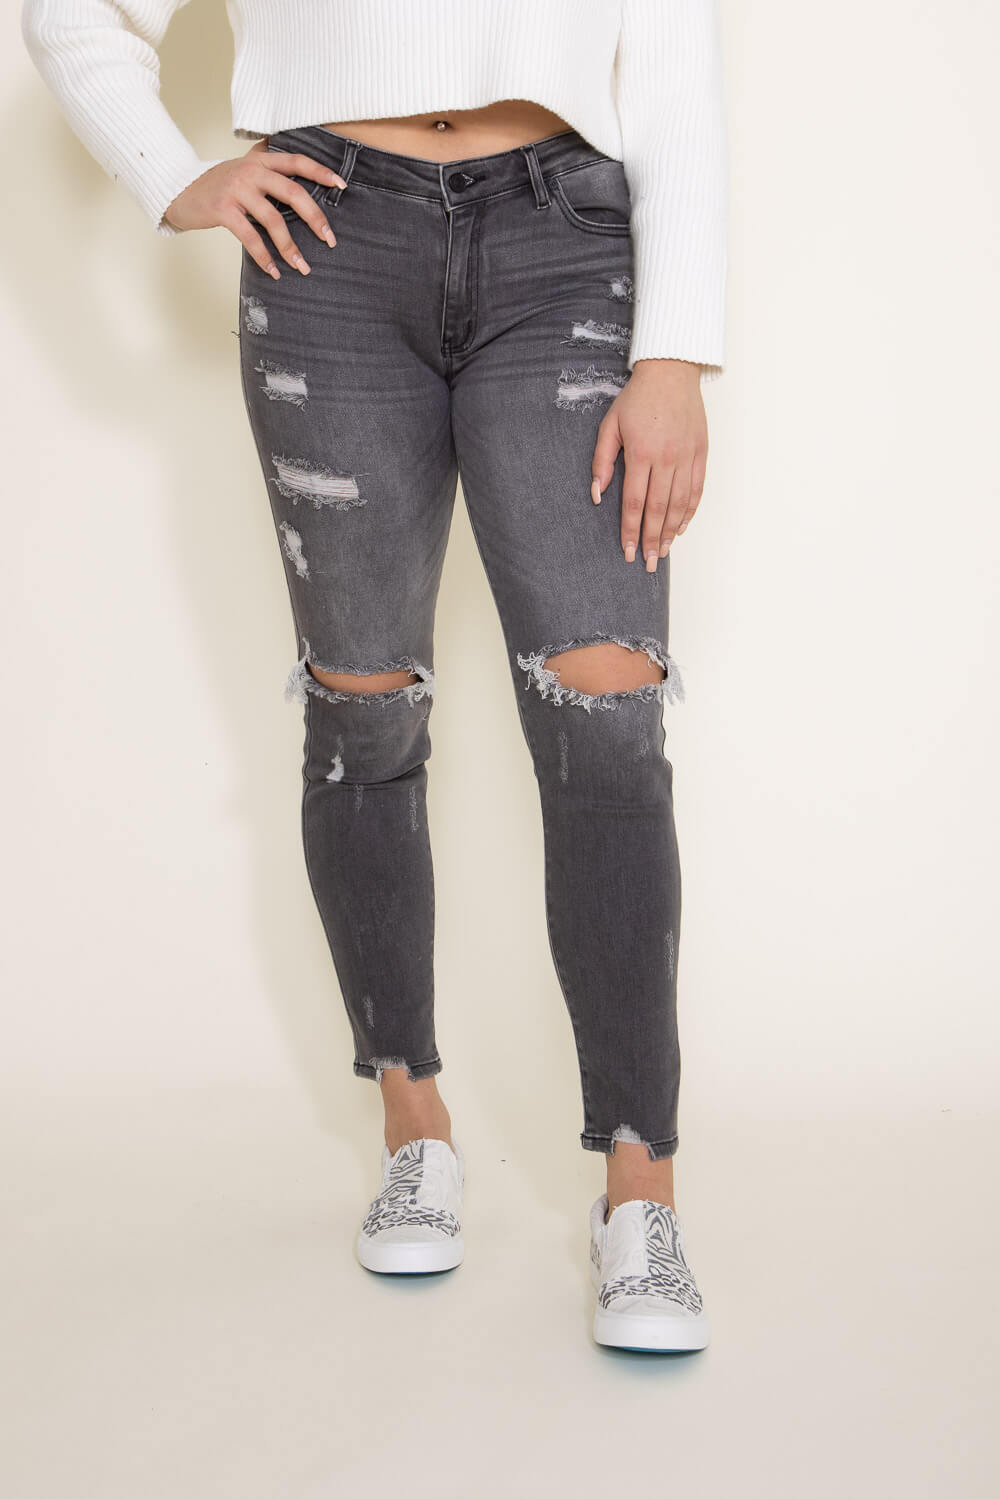 KanCan Rise Distressed Super Skinny Jeans for Women in Light – Glik's